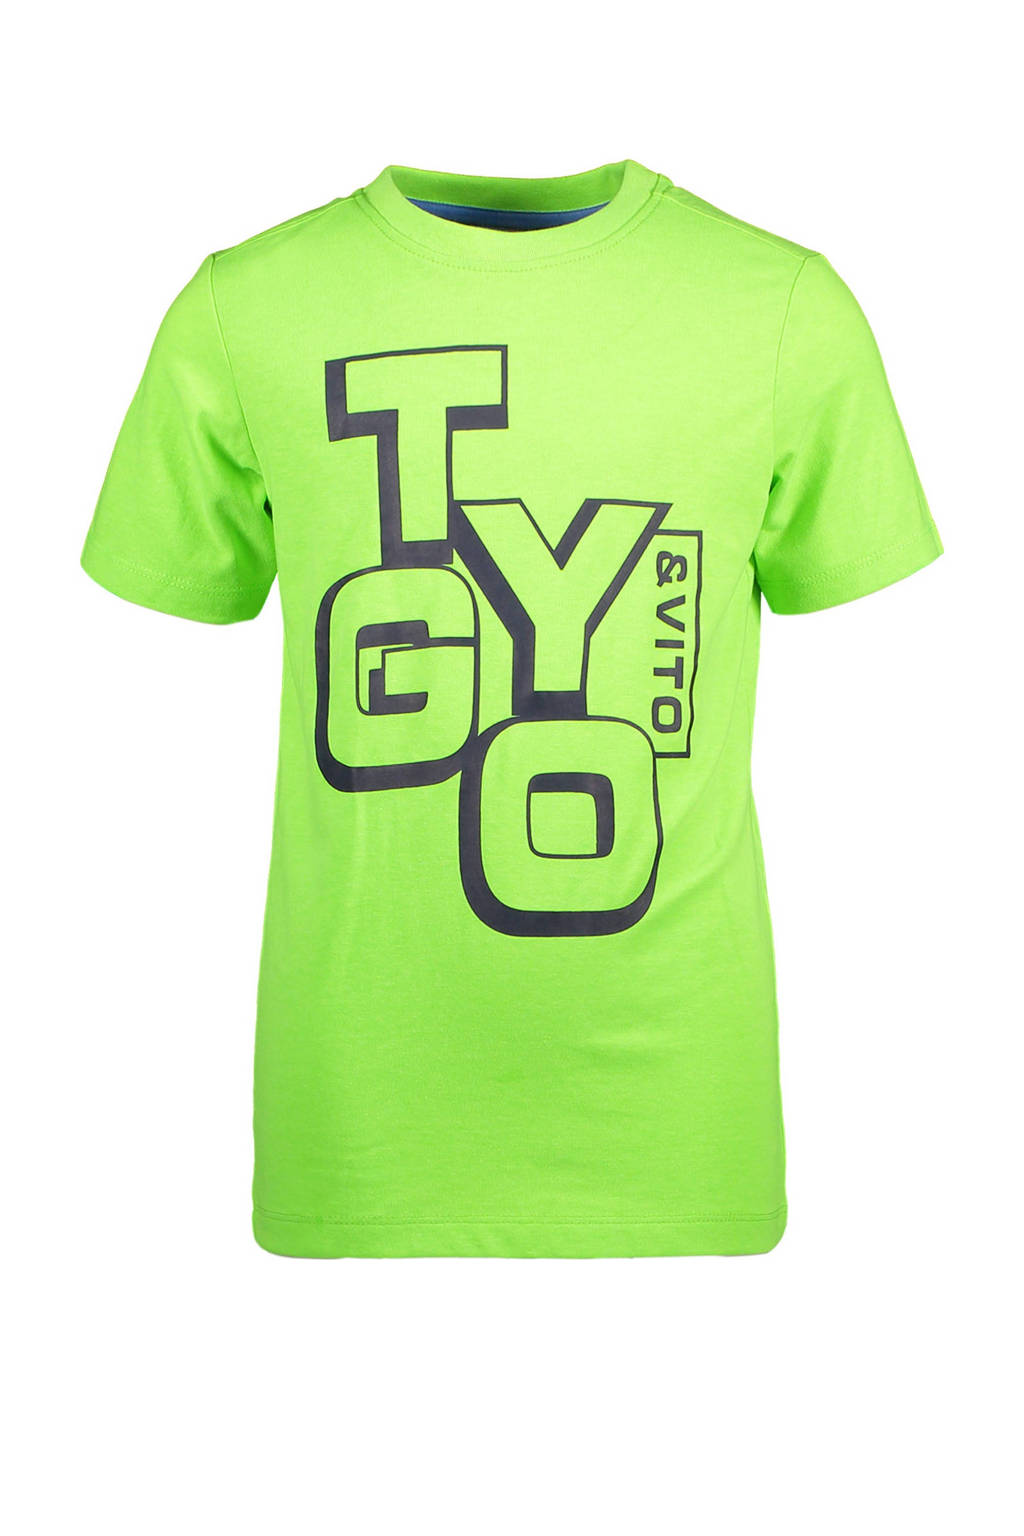 TYGO & vito T-shirt met tekst groen/zwart